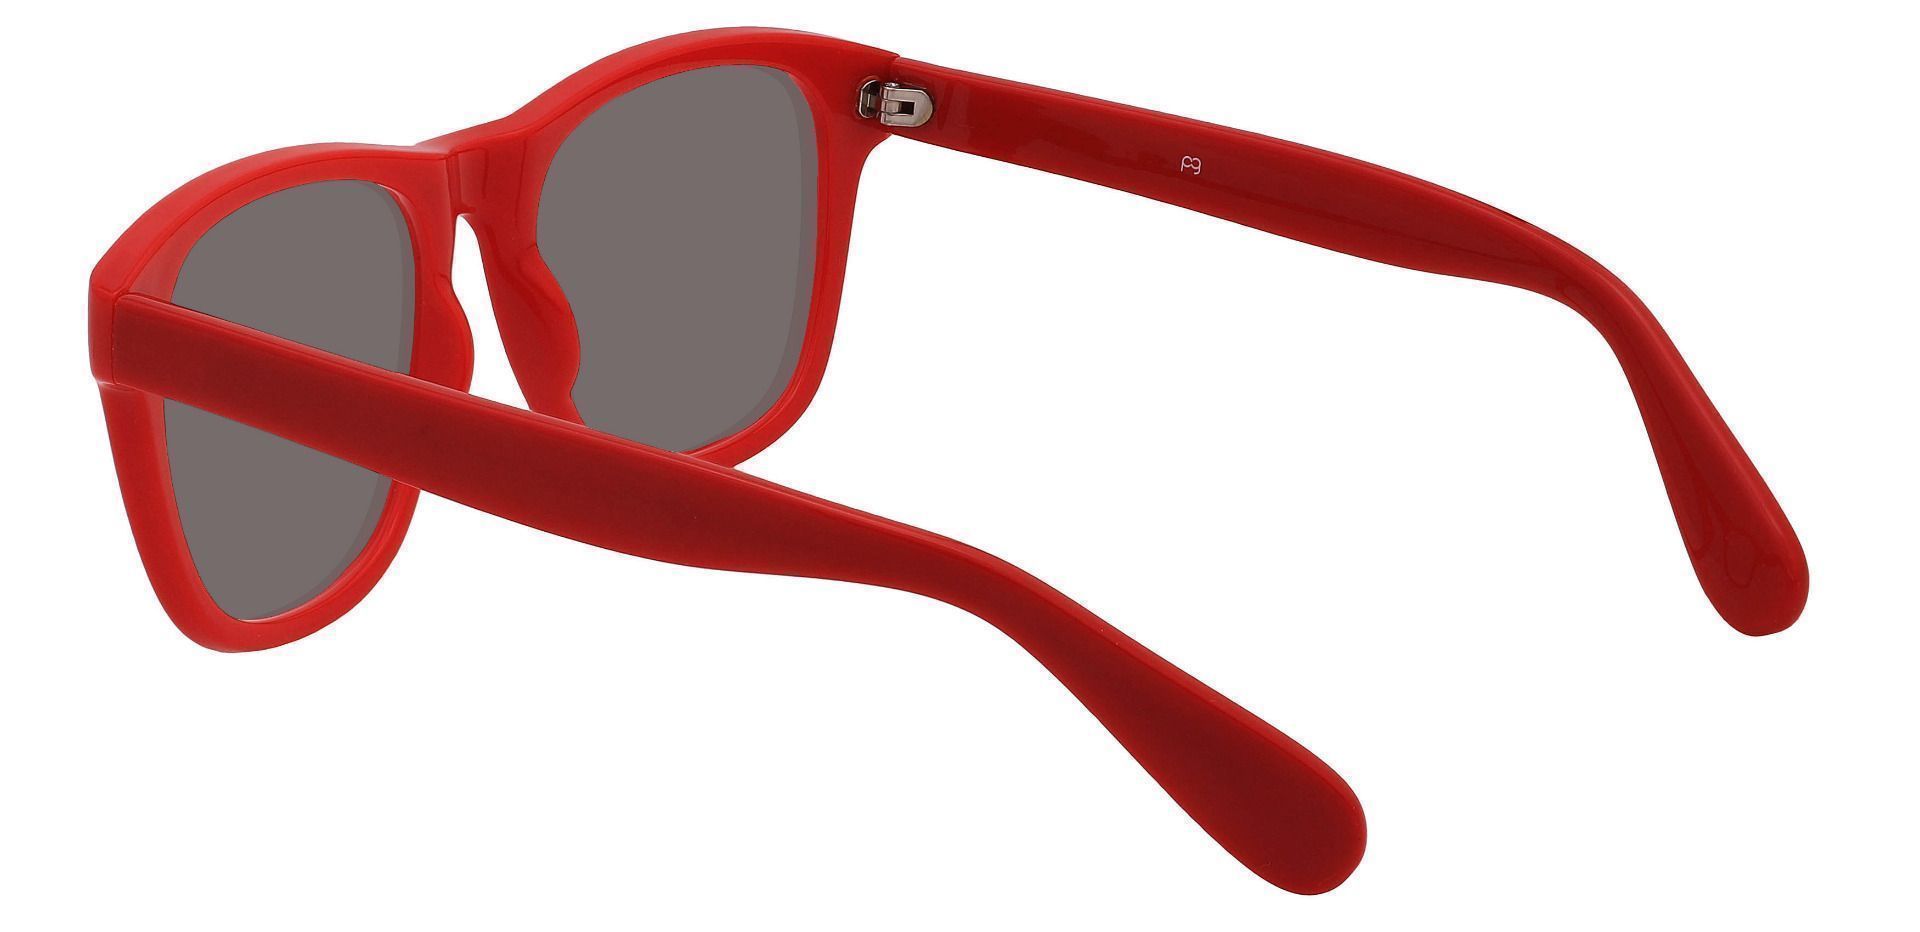 Yolanda Square Non-Rx Sunglasses - Red Frame With Gray Lenses